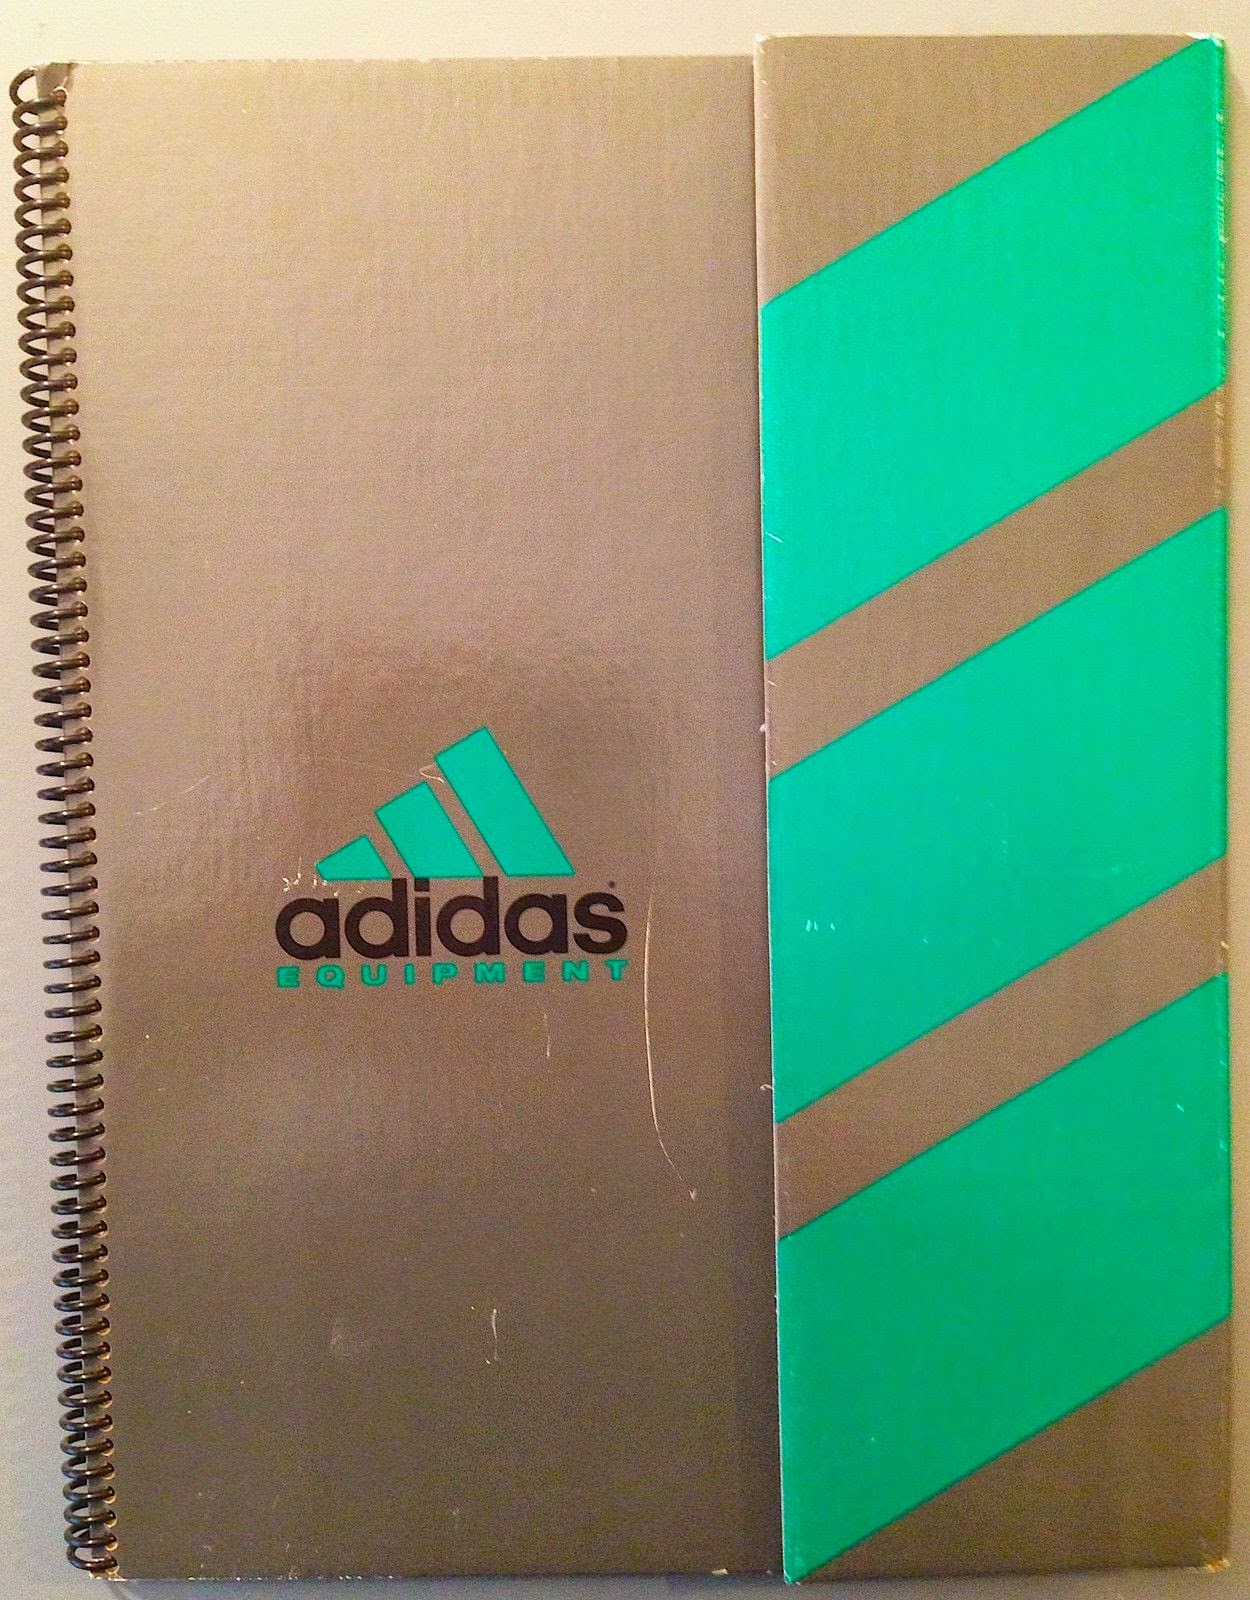 ☆SNEAKERQUEEN☆: Sunday Goodie: 1991 Adidas Equipment Catalog